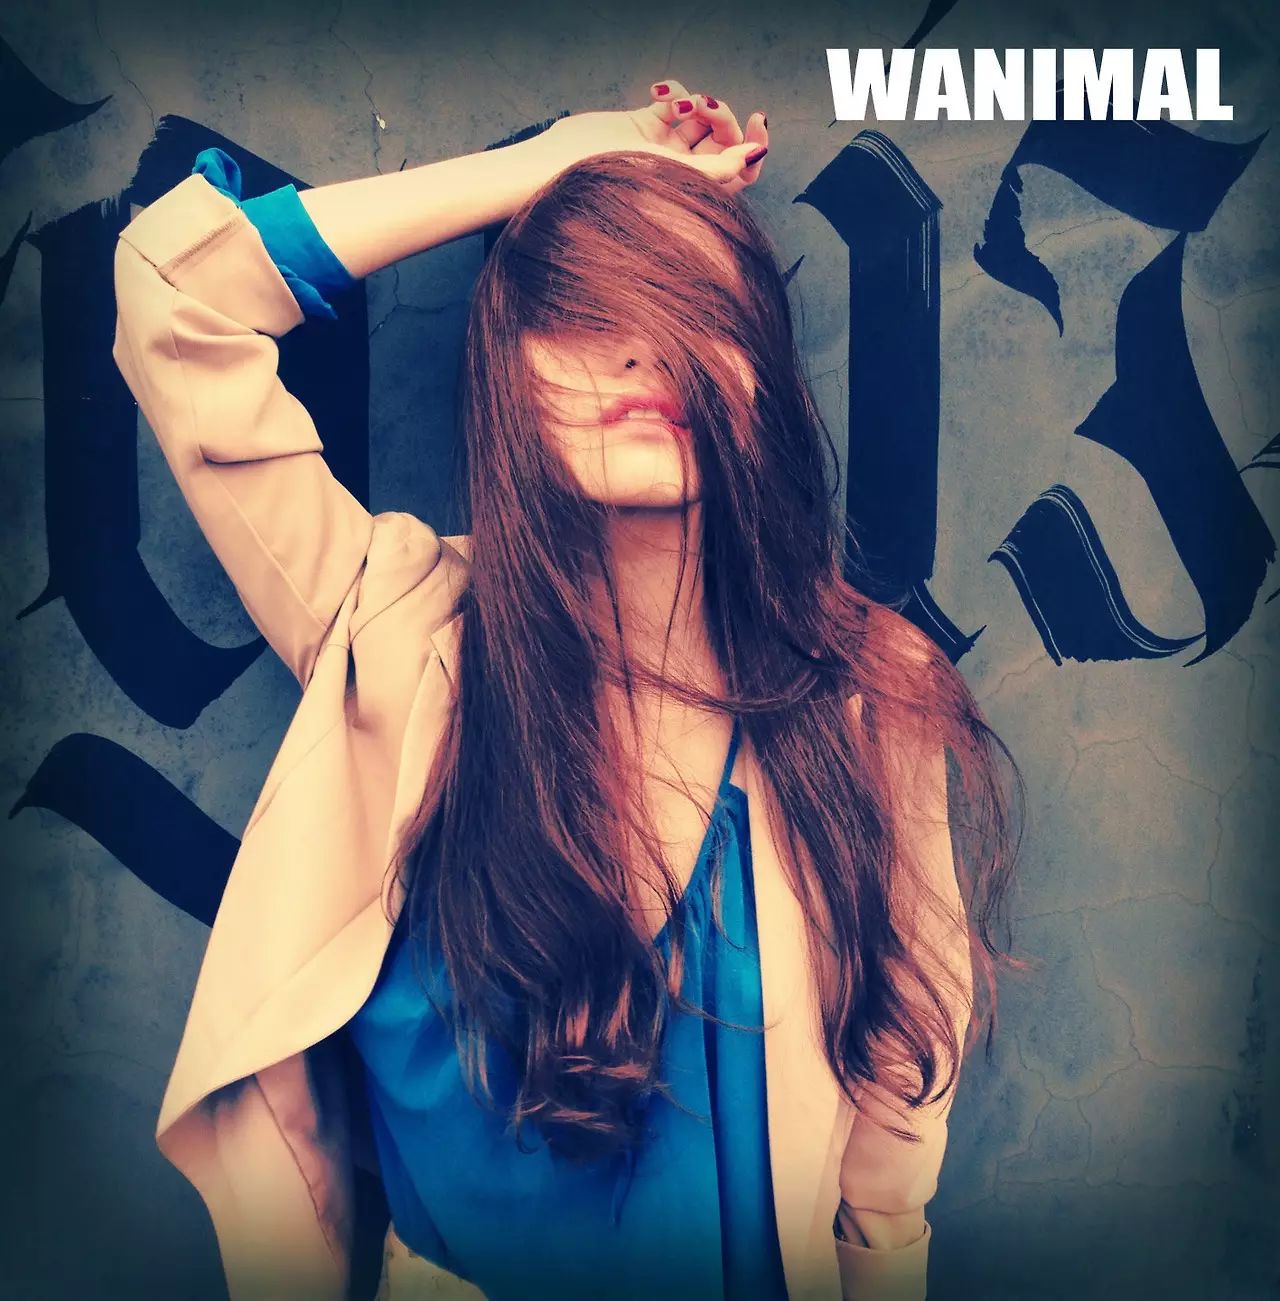 W01 - Bộ Ảnh Wanimal Nude Art Nghệ Thuật | Wanimal Pictures